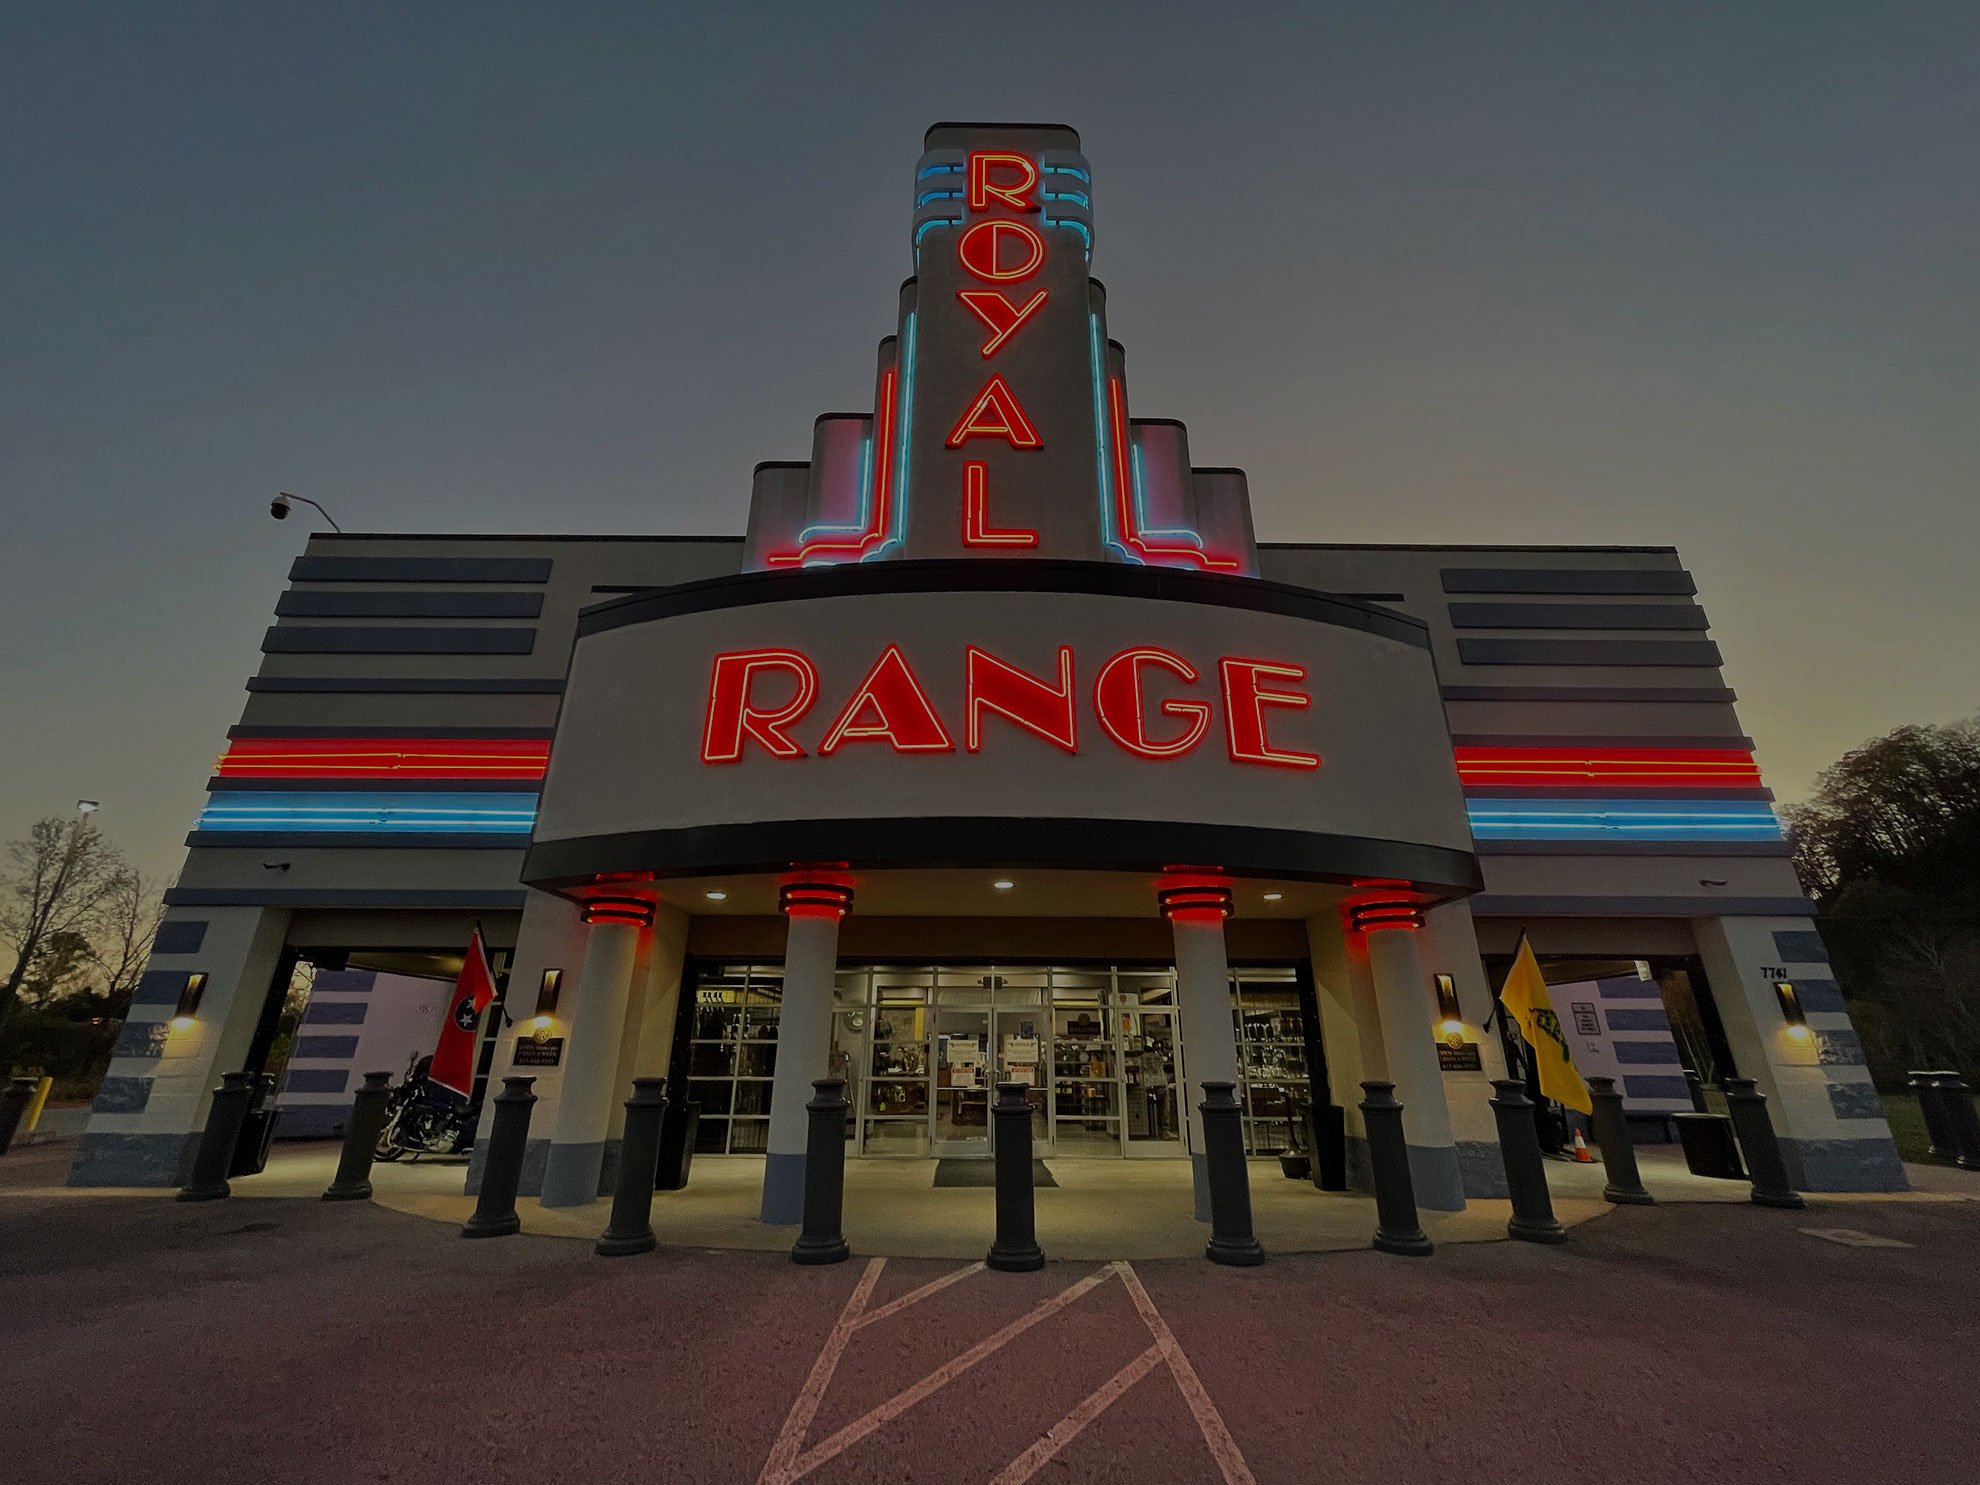 Range SpotLight: Royal Range USAUnique Nashville Range Offers Serious Training Opportunities